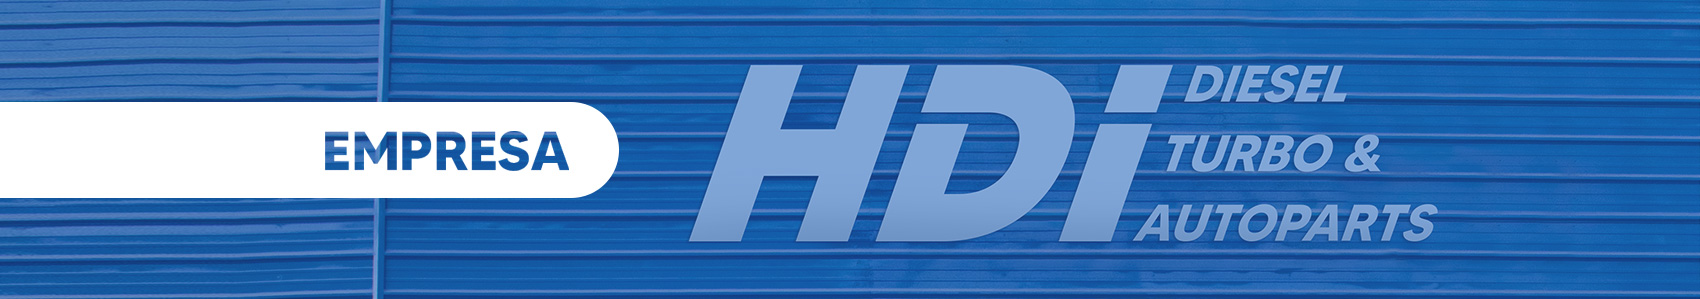 HDI Diesel Turbo & Autoparts 🏅 | Venta repuestos originales